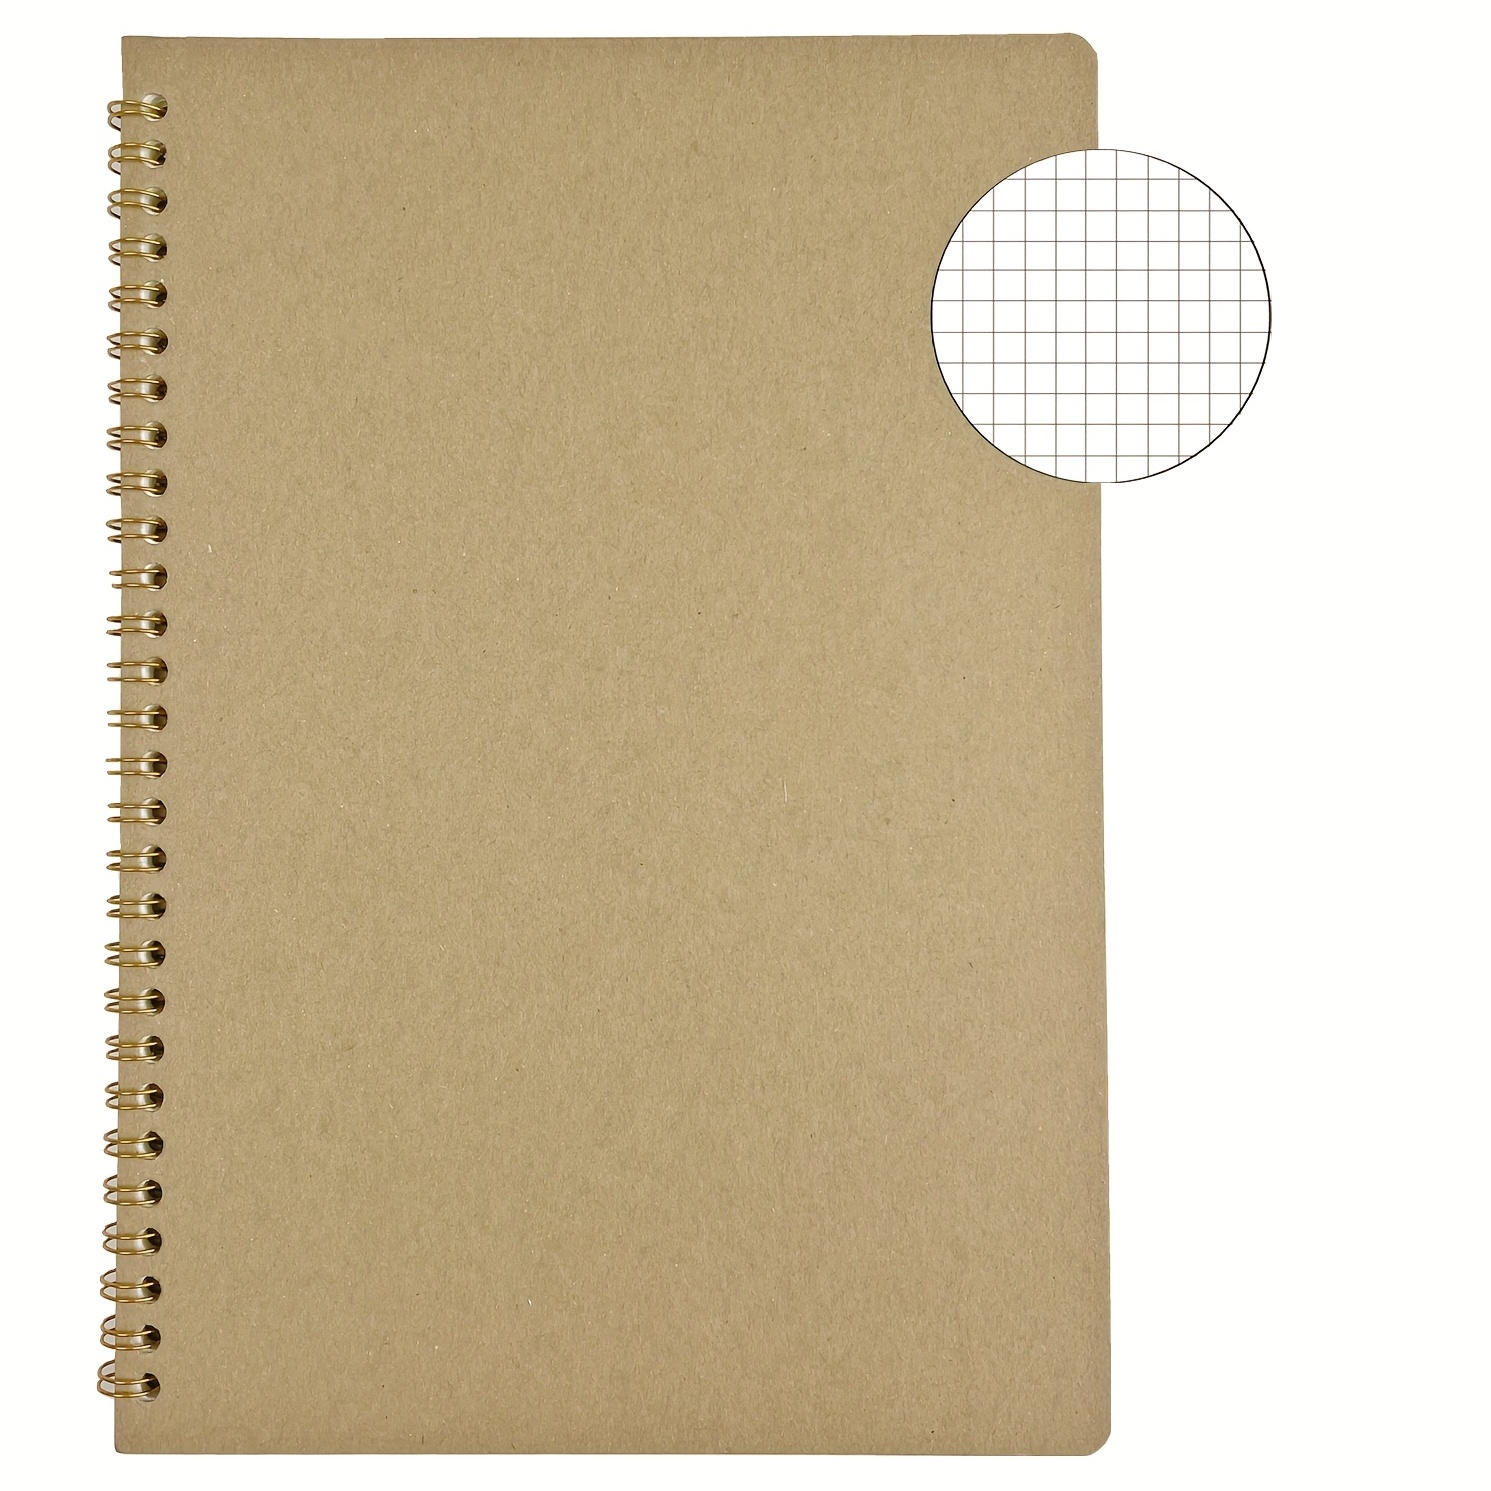 Pro Art Premium Sketch Paper Pad 5.5x8.5 100 sheets, 60#, Wire